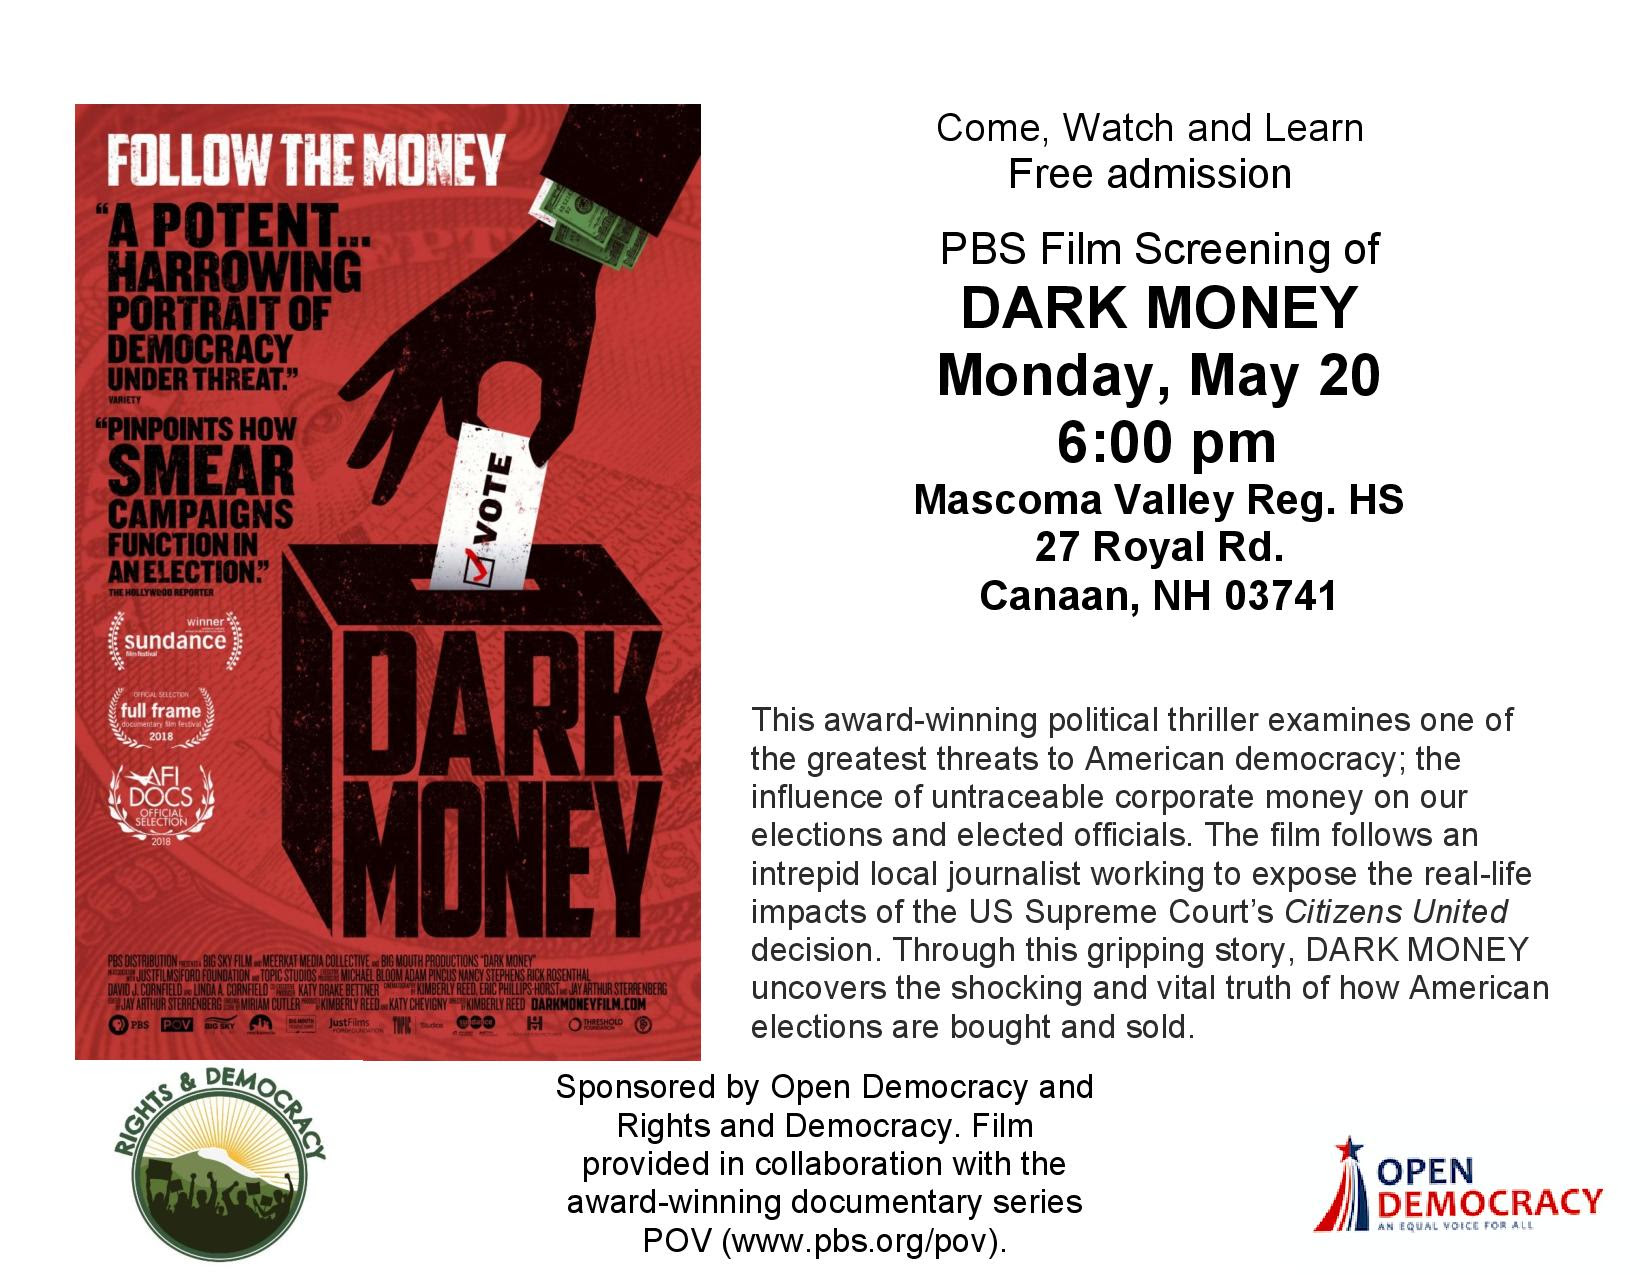 Poster for screening of Dark Money film